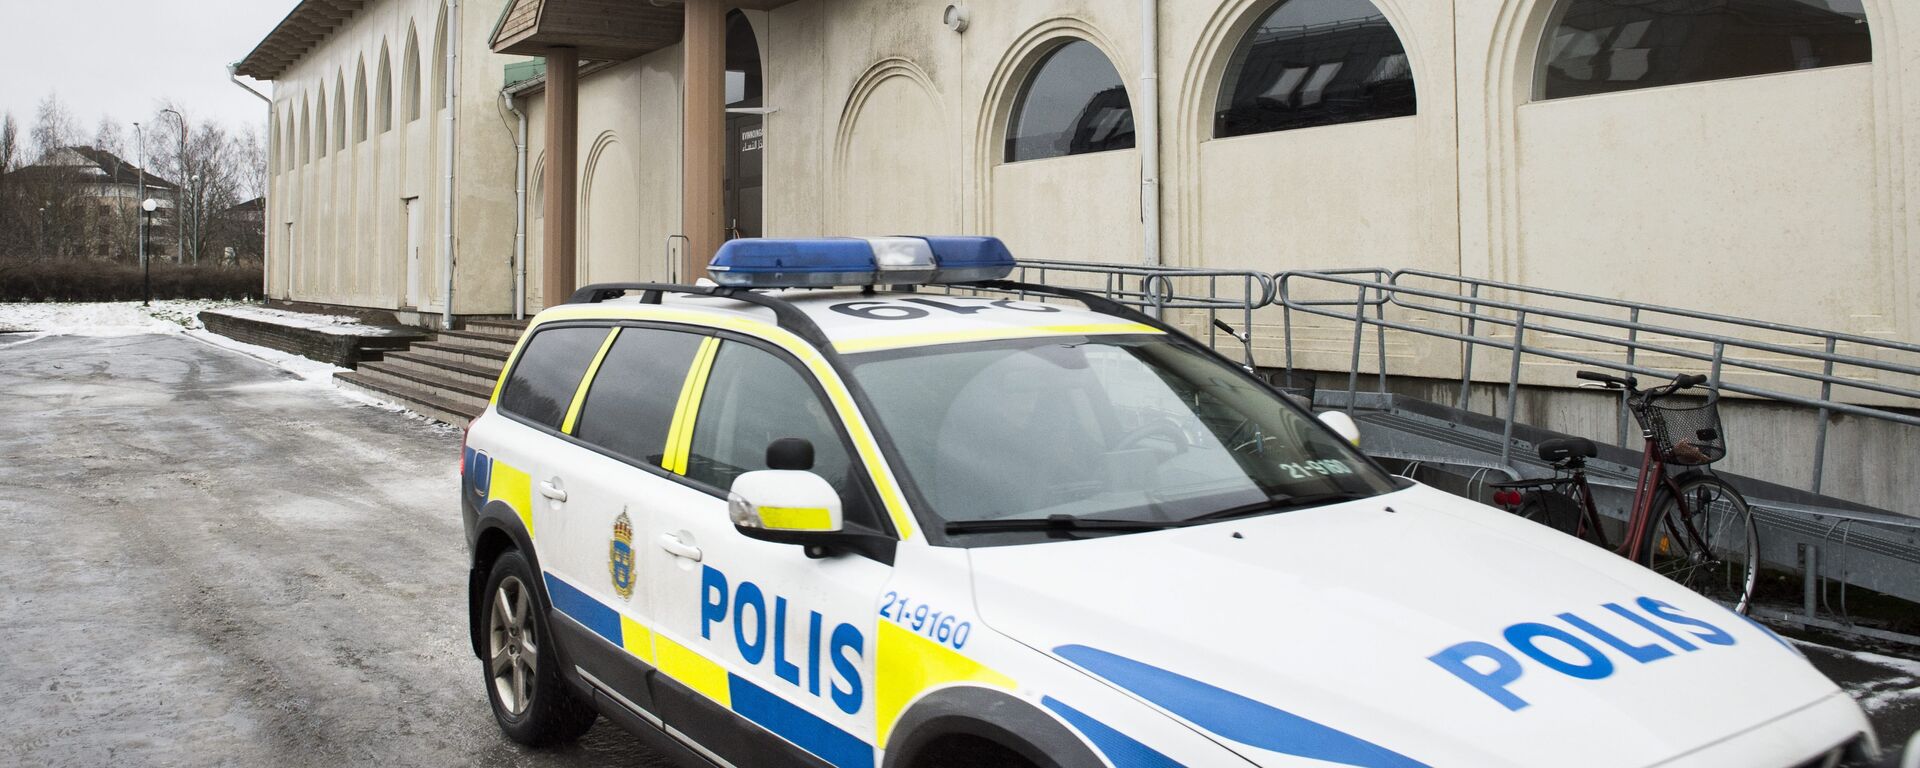 (File) A police car is parked in front of a mosque in Uppsala, Sweden Thursday Jan. 1, 2015 - Sputnik International, 1920, 28.08.2020